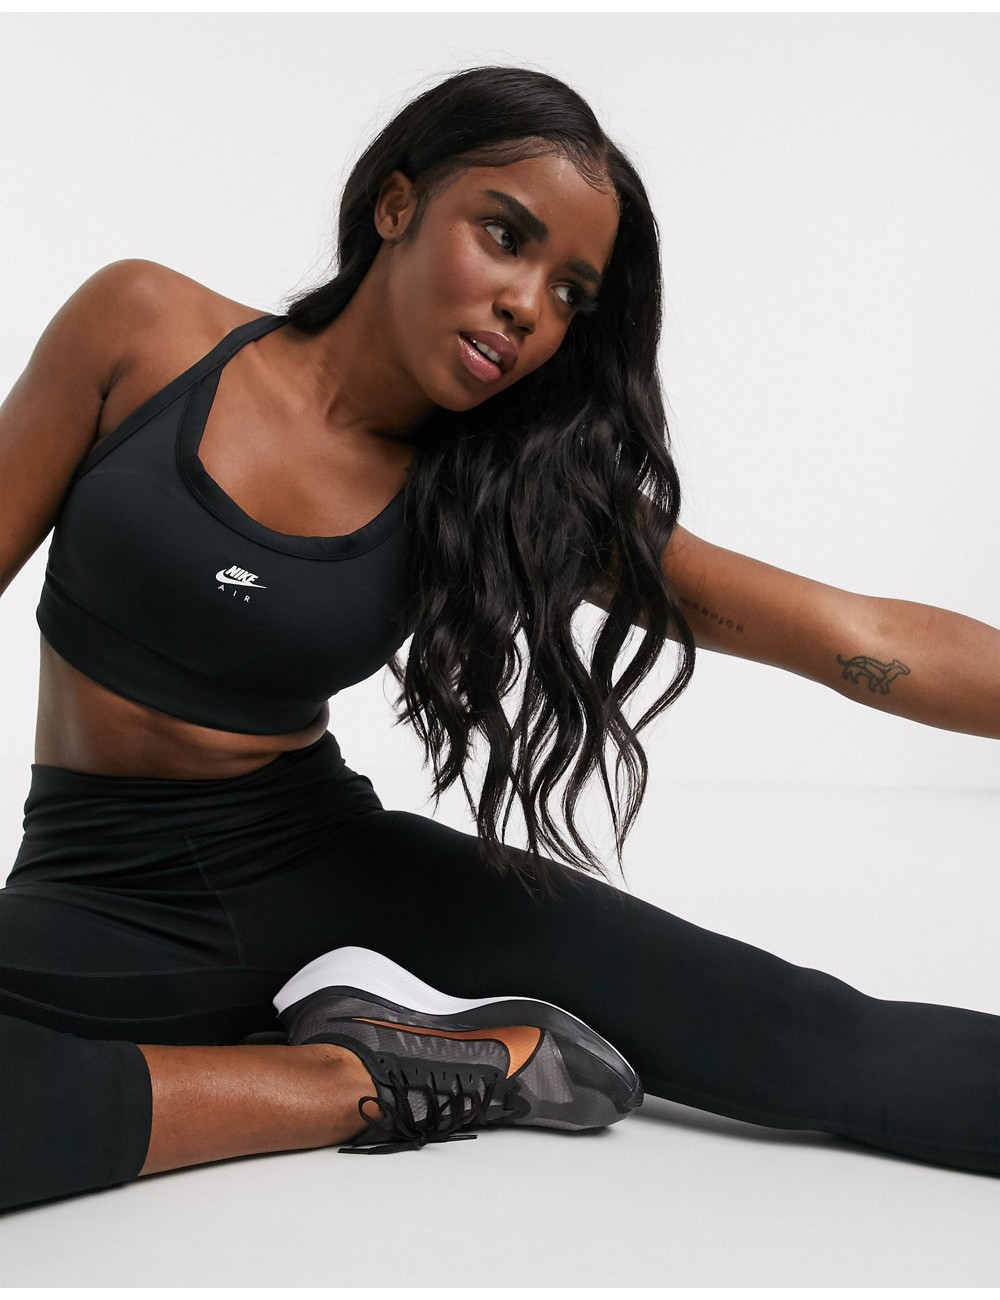 Nike Training Air bra in black